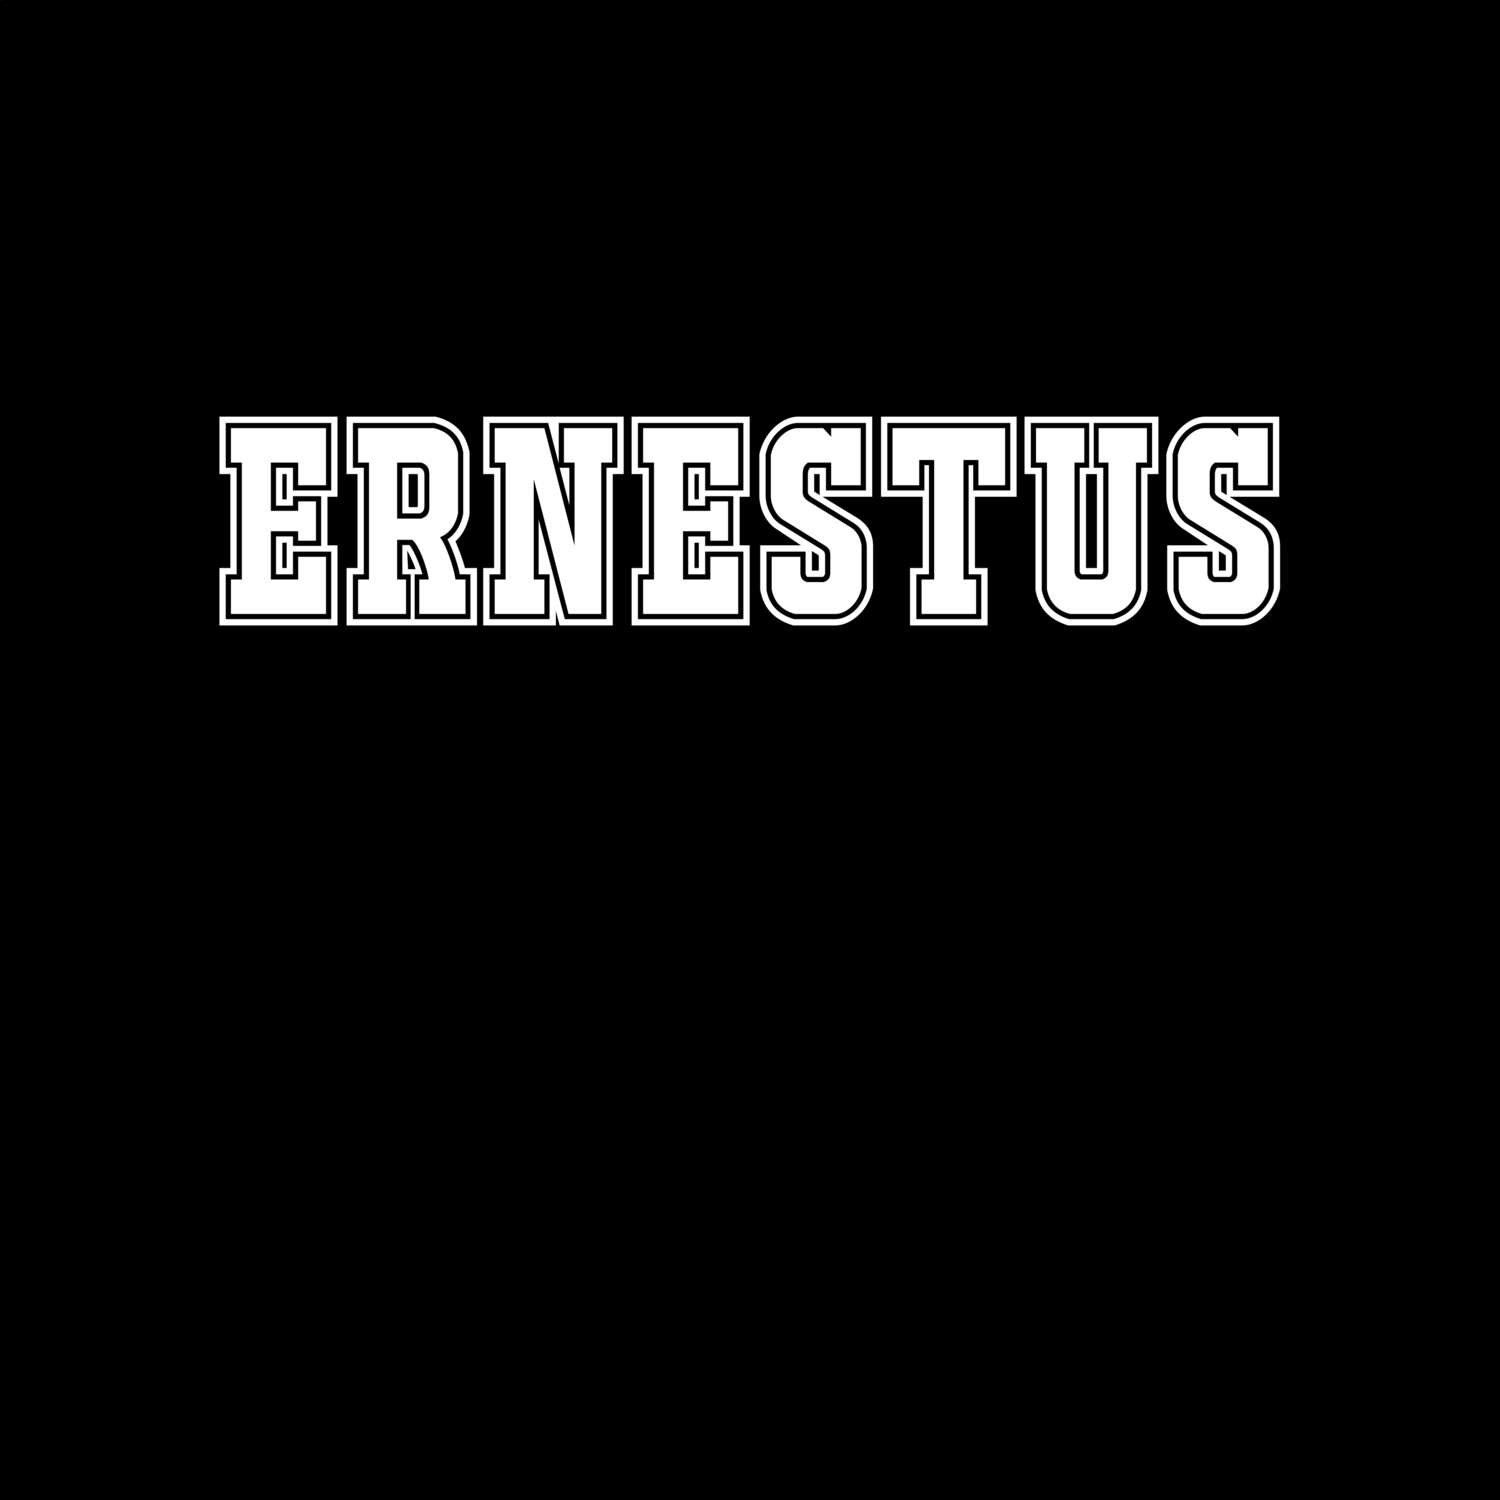 Ernestus T-Shirt »Classic«